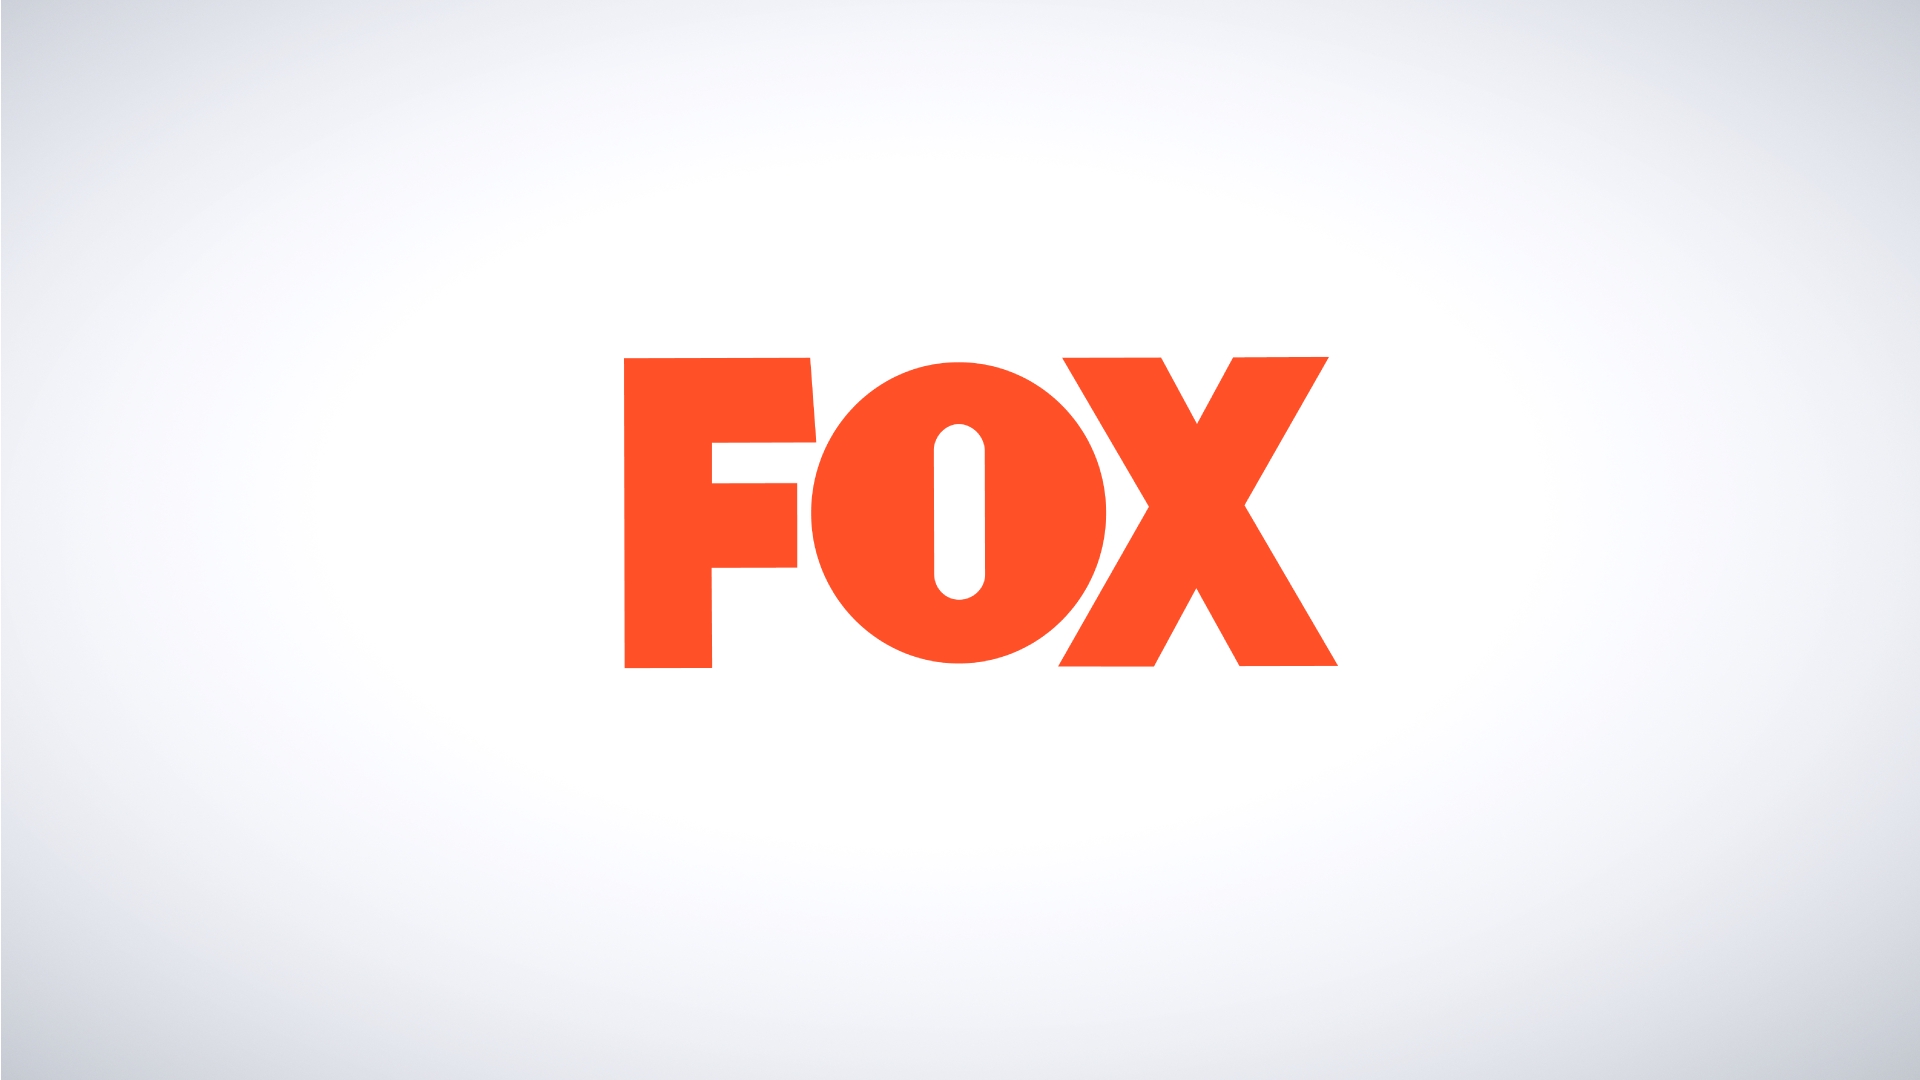 Телевизор fox. Телеканал Fox. Логотип канала Фокс. Канал Fox TV.